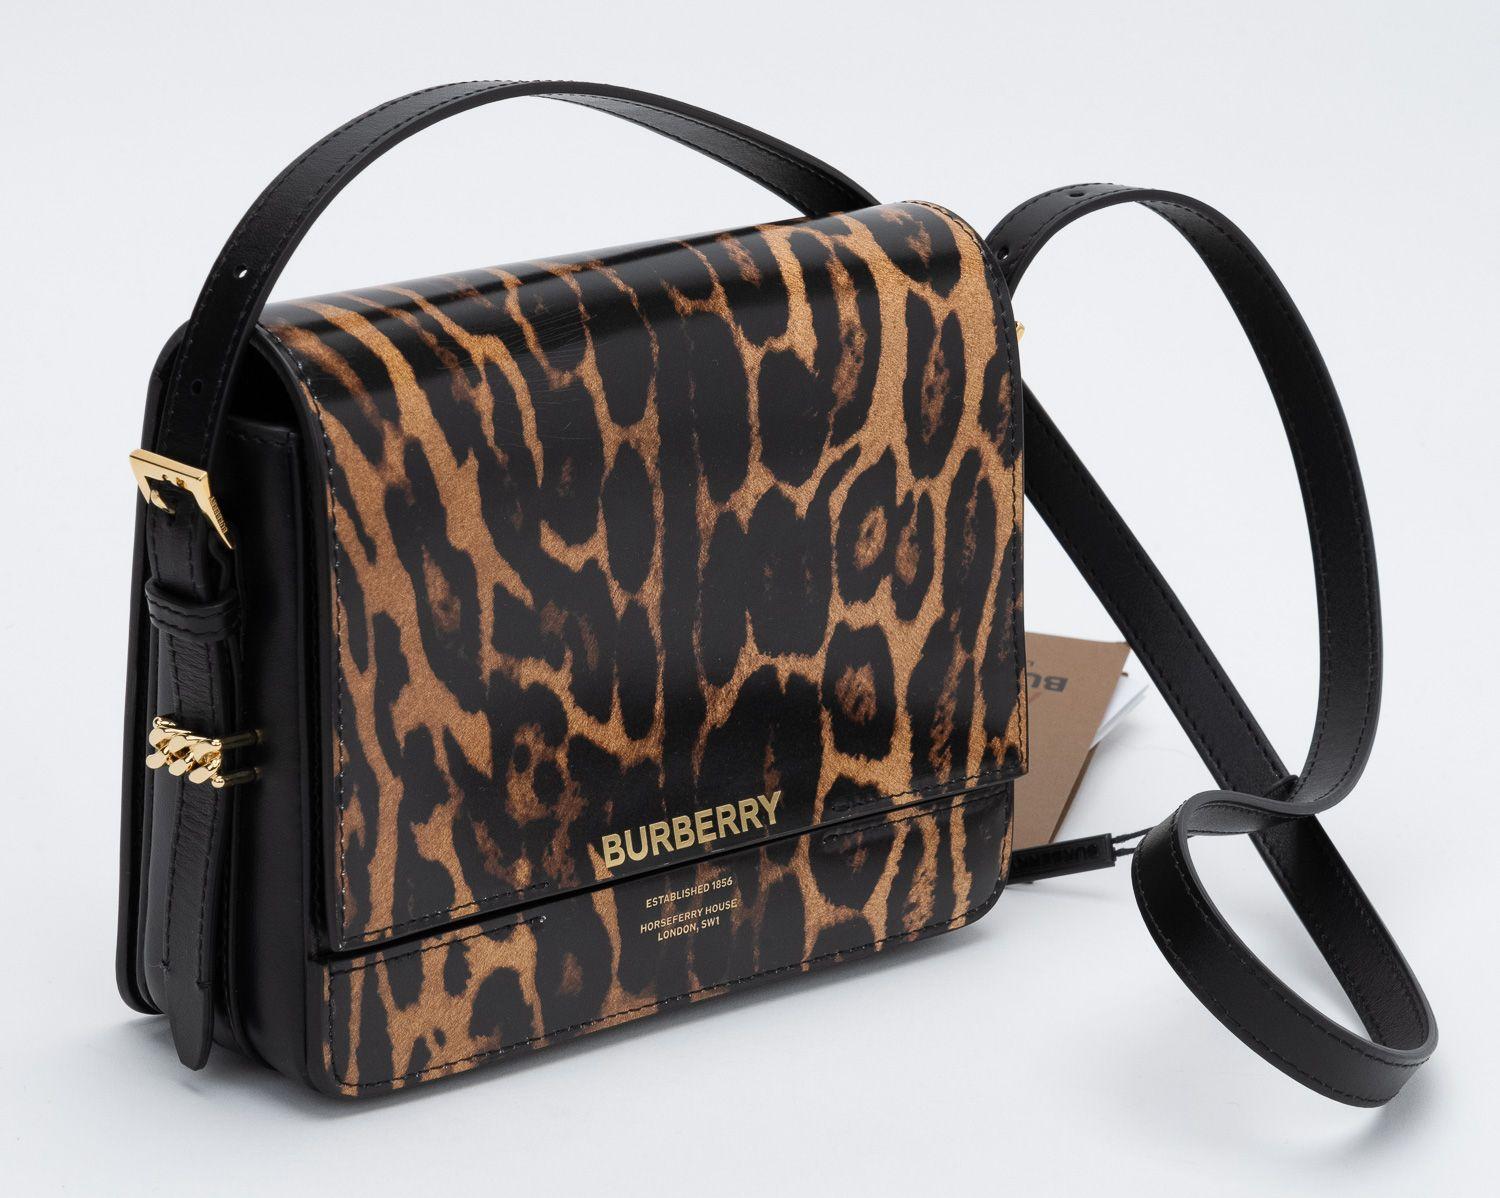 Burberry New Calfskin black and cheetah print shoulder bag.
Shoulder drop 18